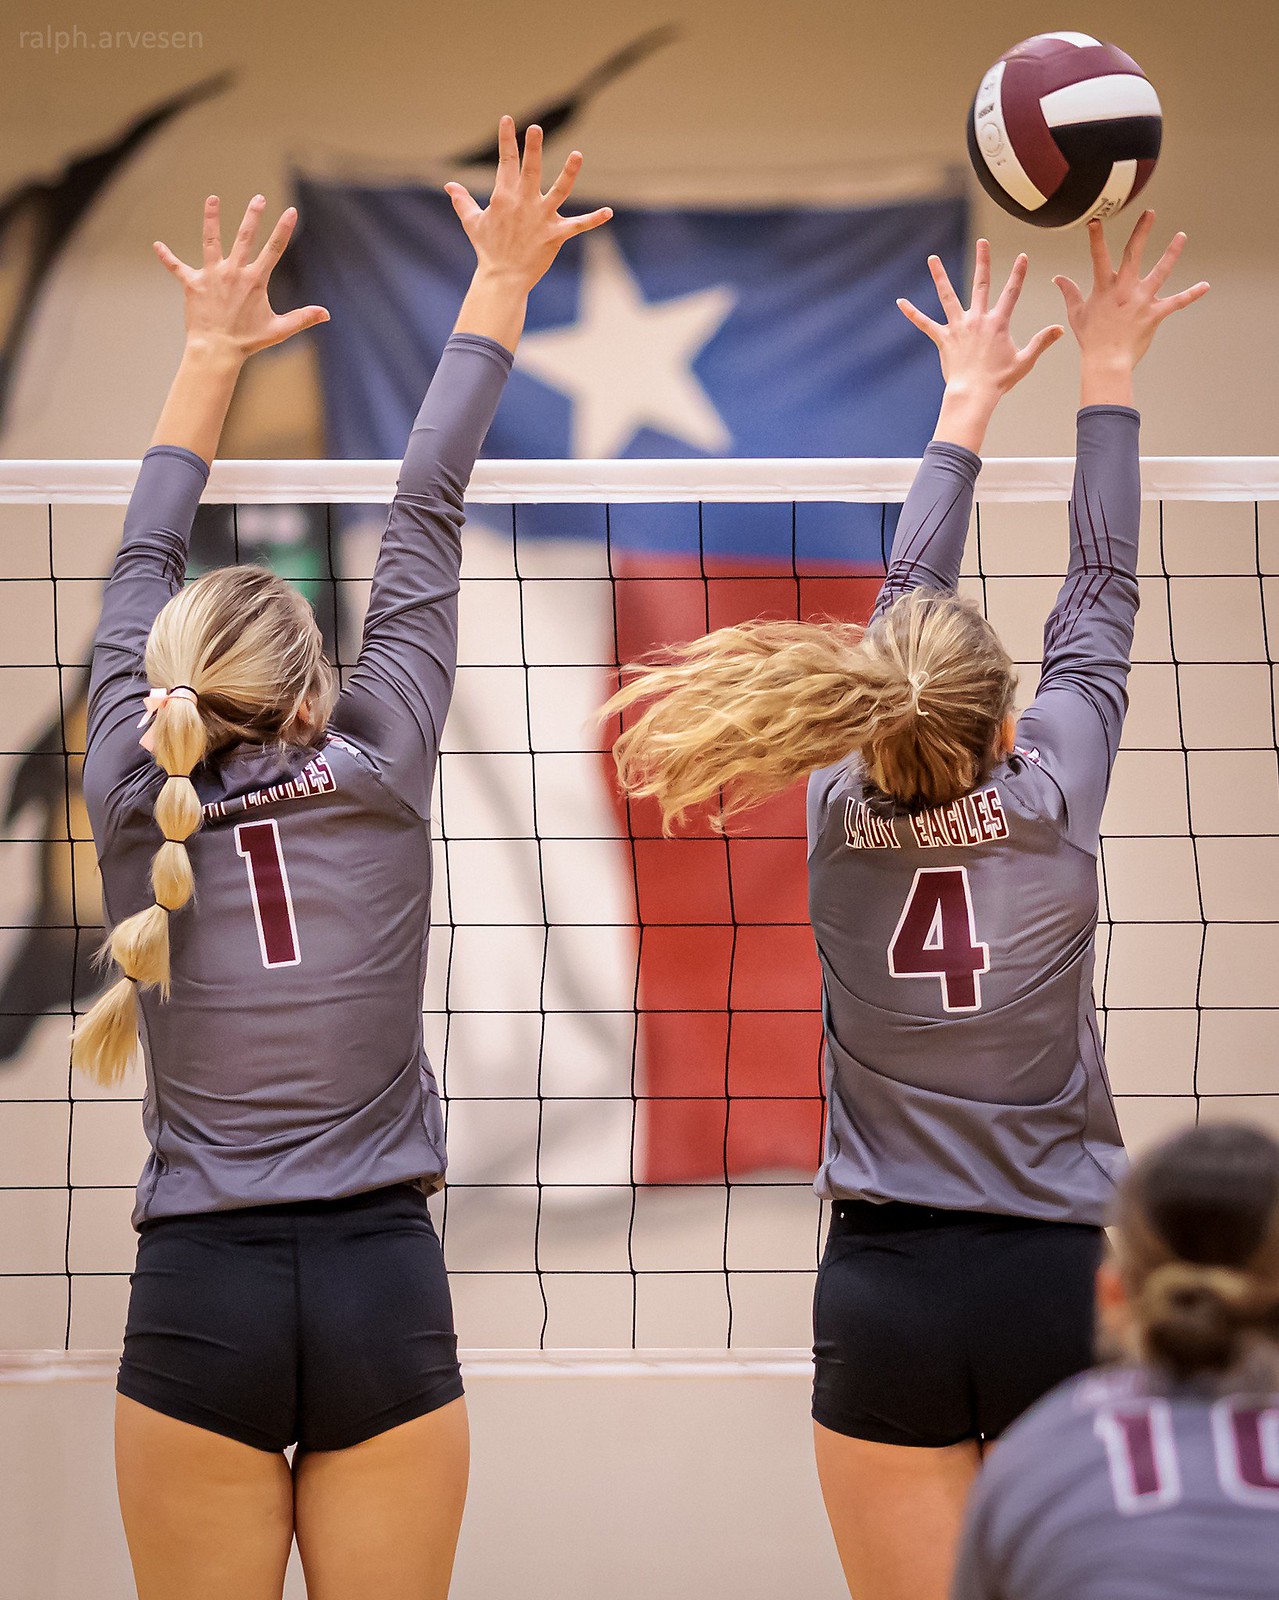 Johnson City Volleyball | Texas Review | Ralph Arvesen